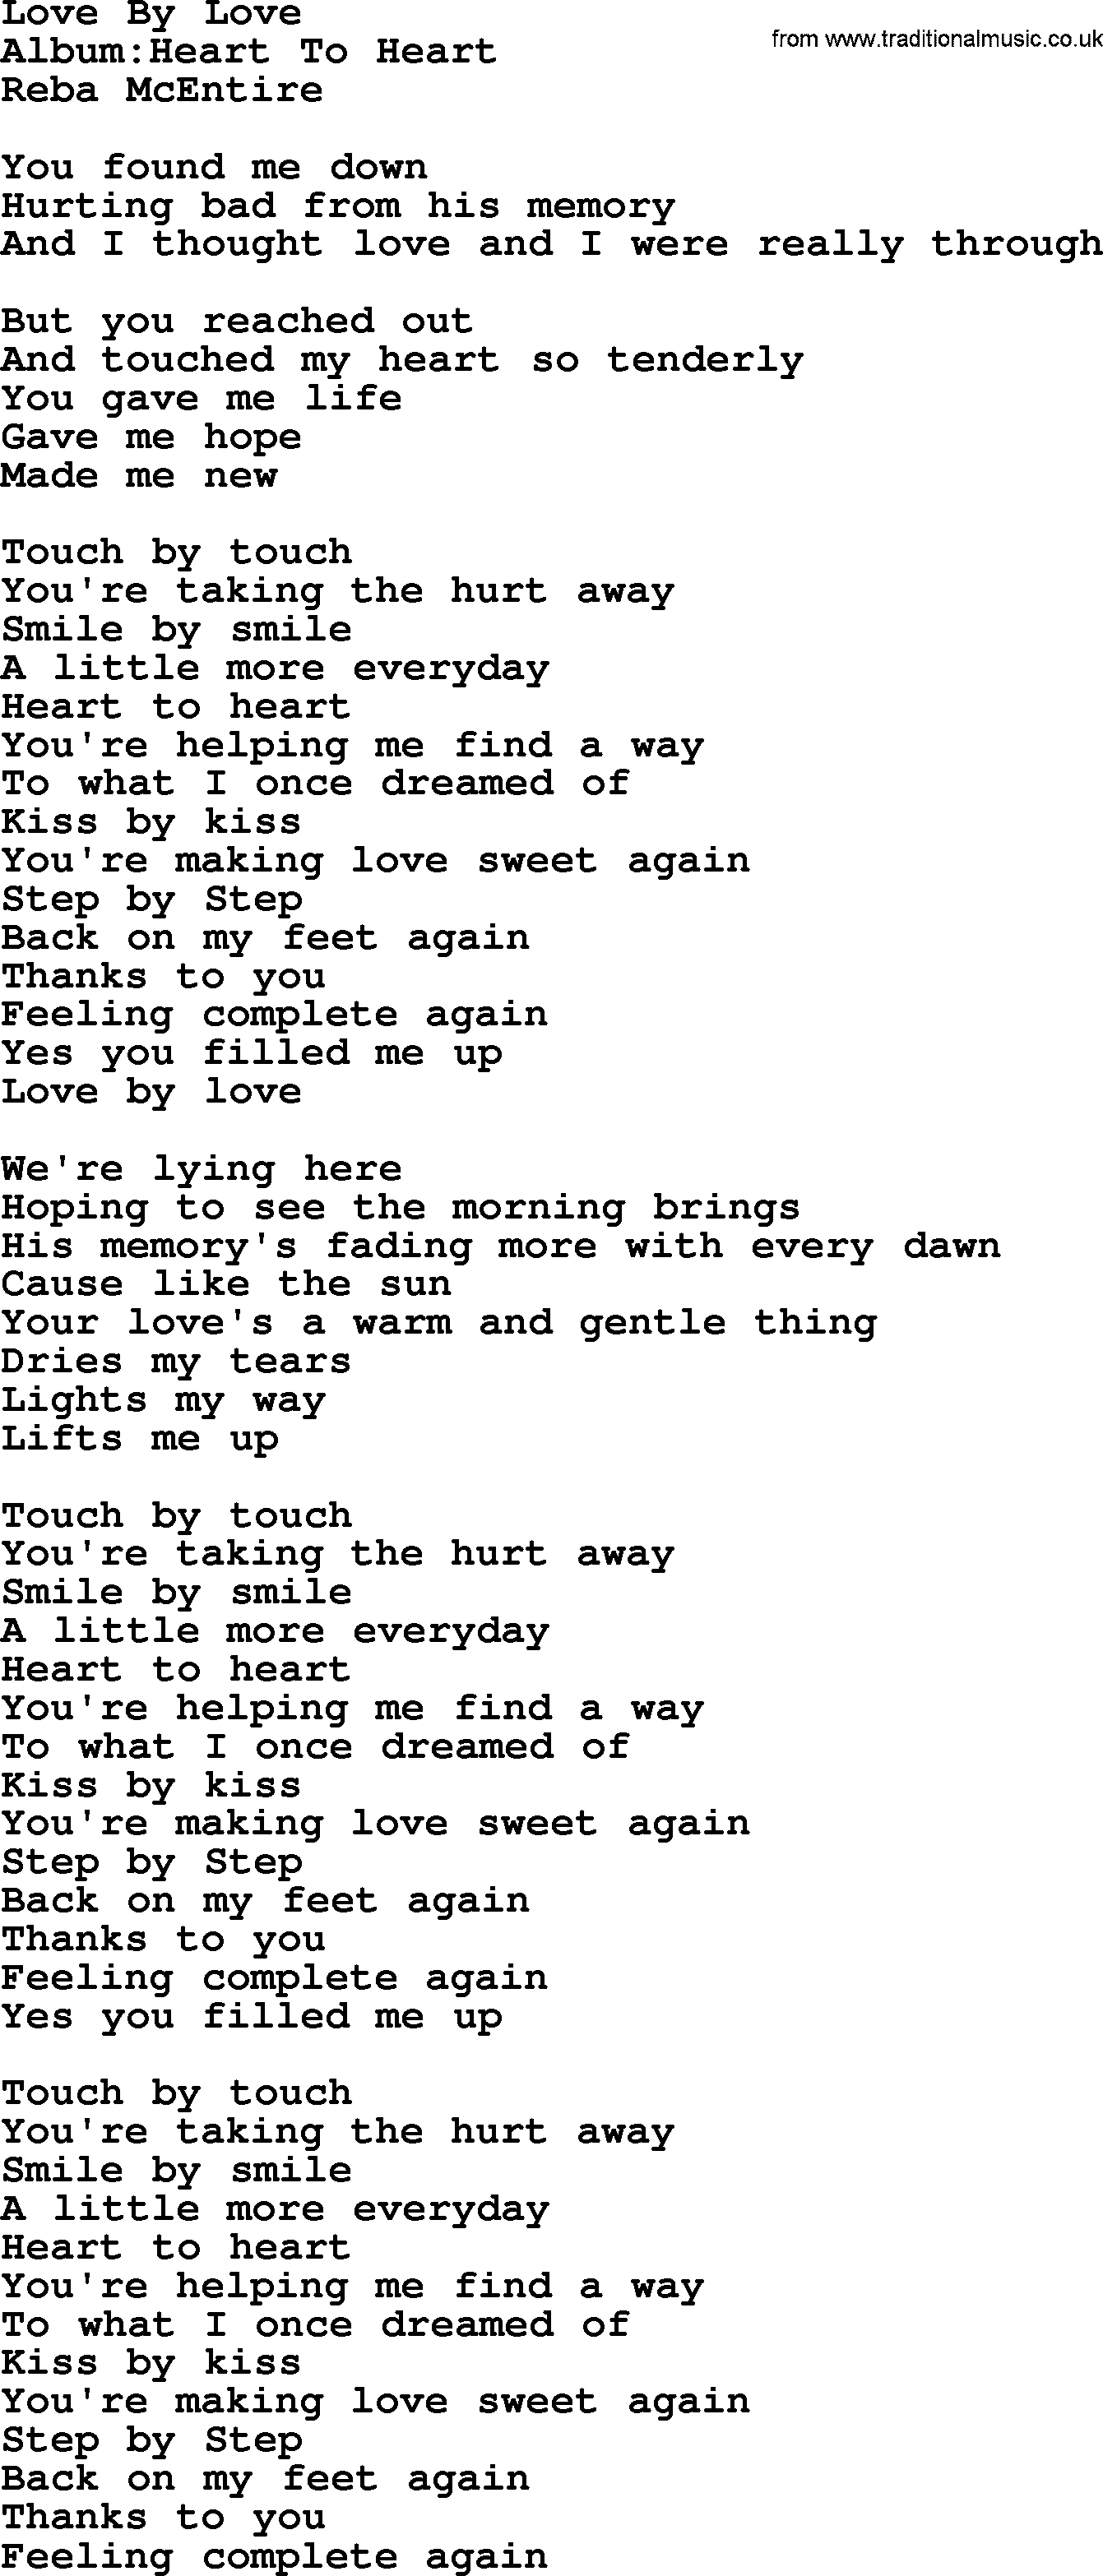 Reba McEntire song: Love By Love lyrics